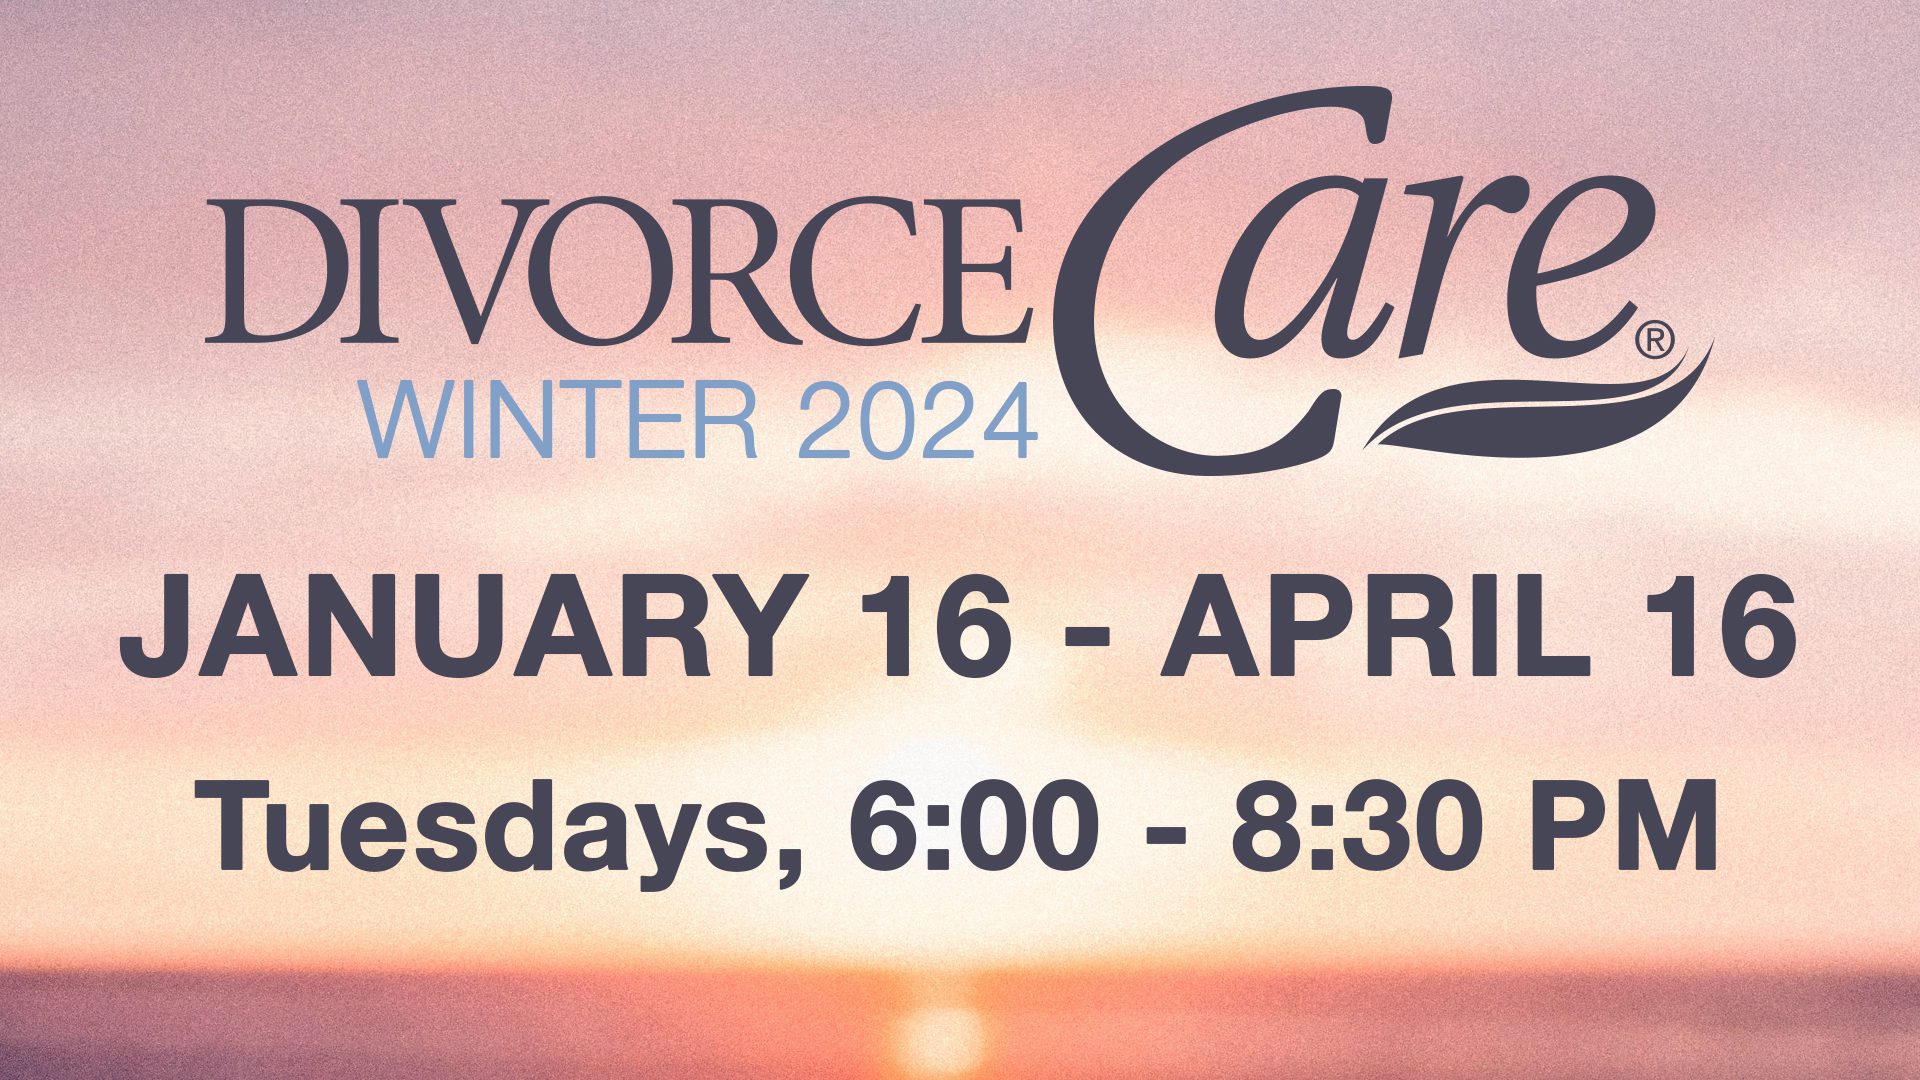 DivorceCare Winter 2024